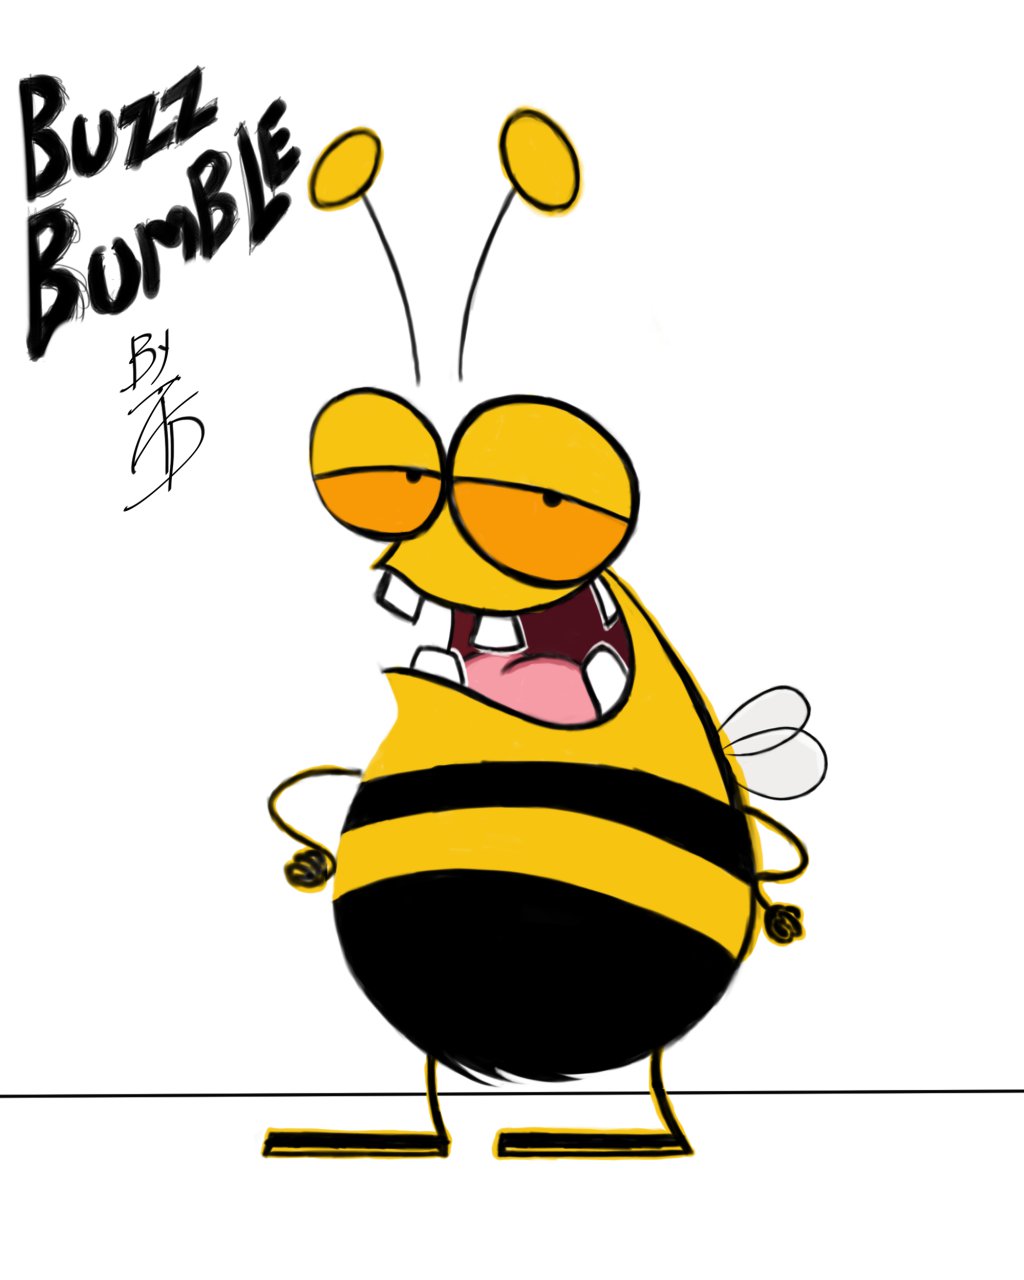 Buzz Bumble (Fanart)